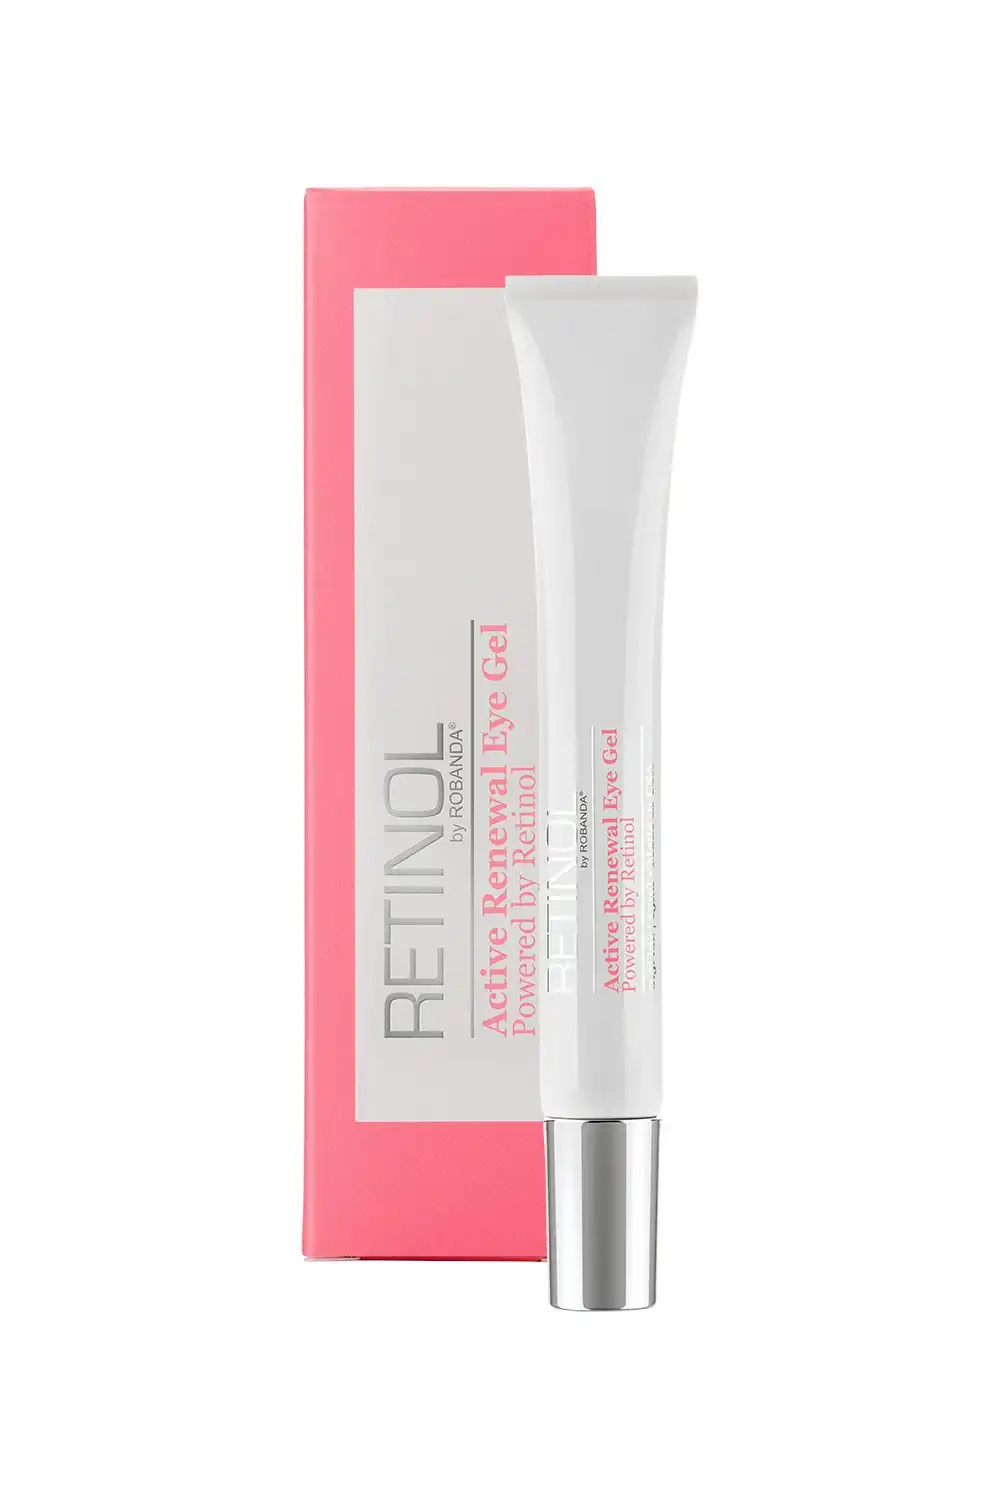 Retinol by Robanda - Active Renewal Eye Gel 15ml Vitamin A Dark Circle Cream